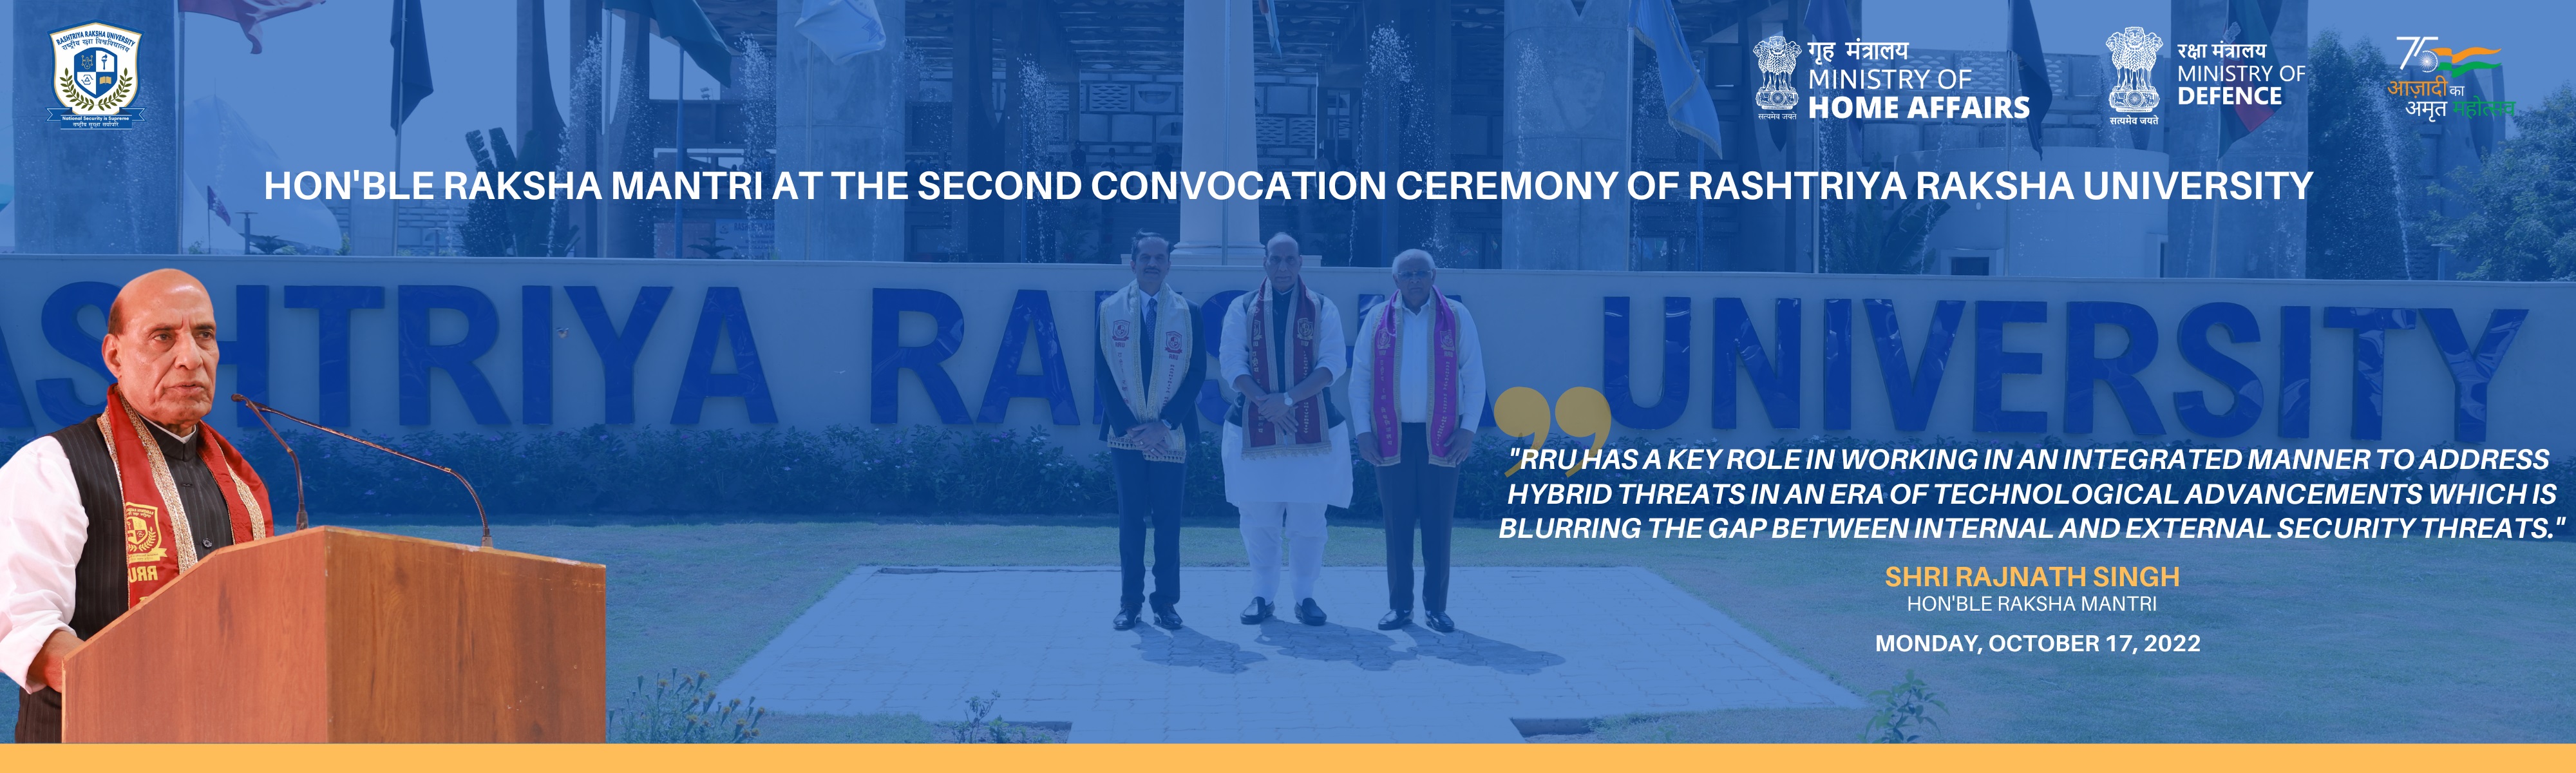 Honorable Raksha Mantri at the second convocation ceremony of Rashtriya Raksha University